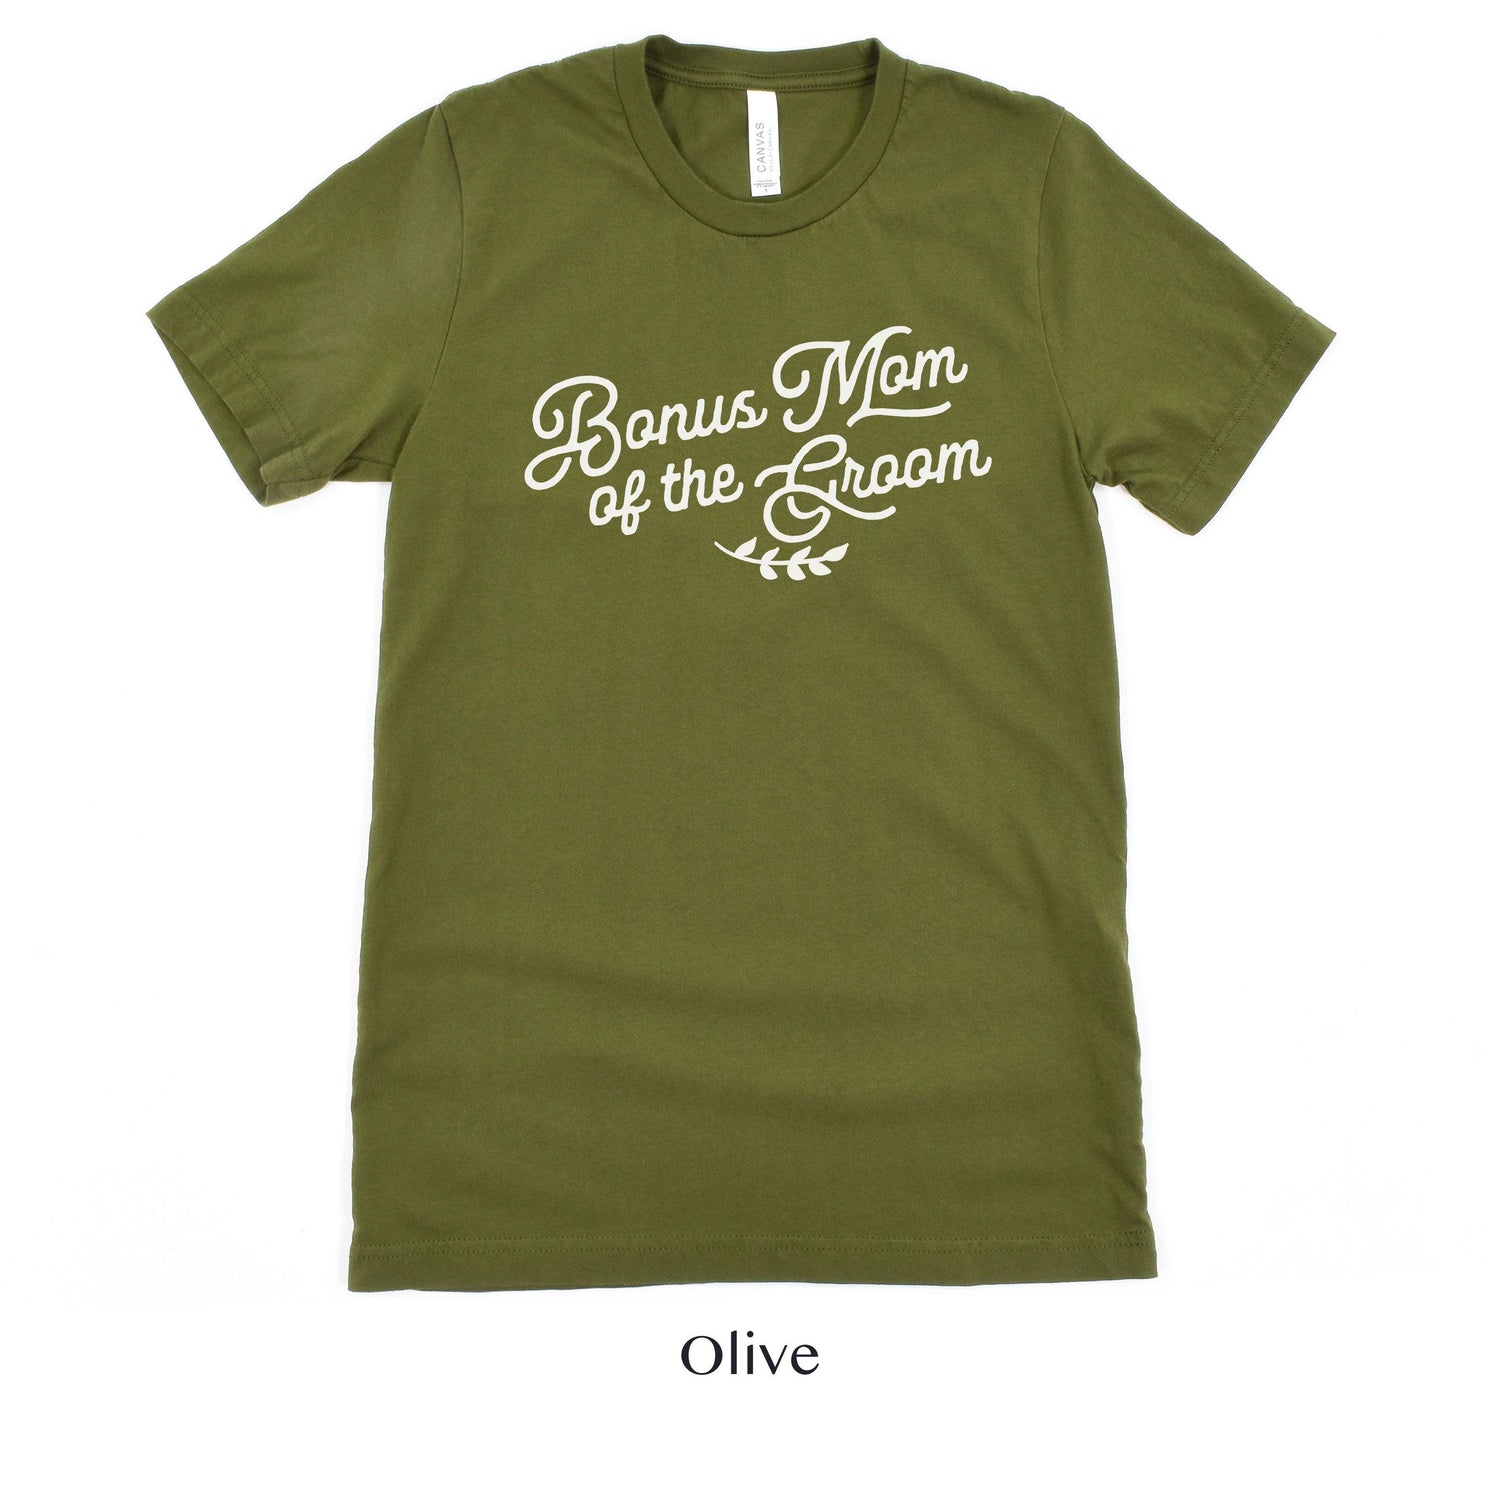 Bonus Mom of the Groom Short-sleeve Tee by Oaklynn Lane - Olive Green Shirt